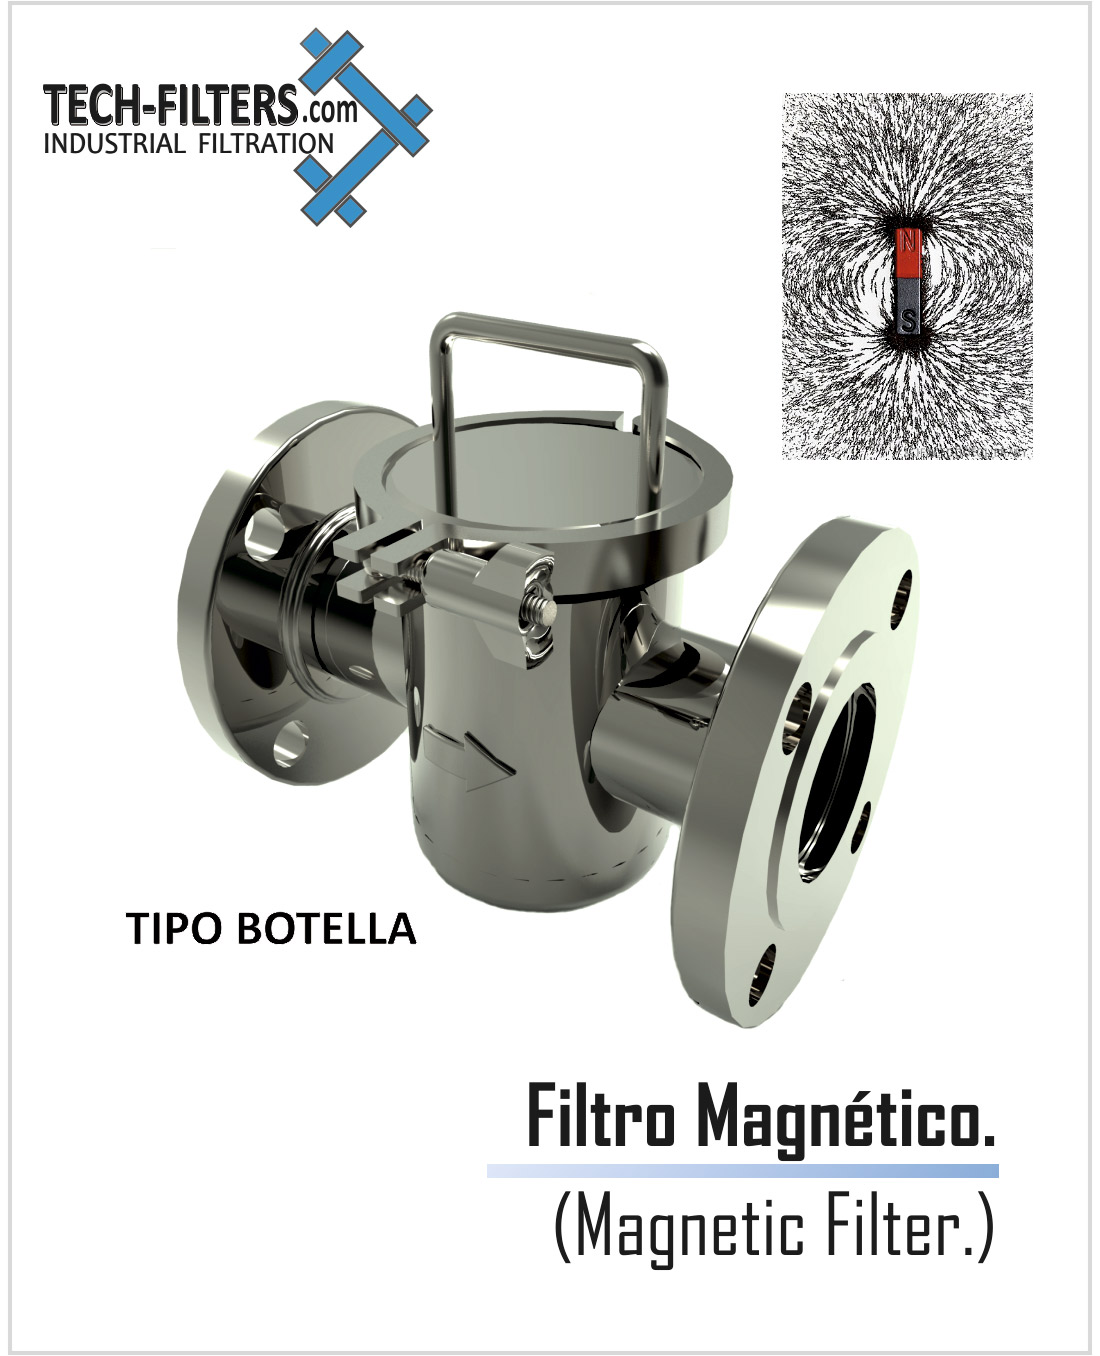 Filtro industrial Magnético. Tech-Filters 